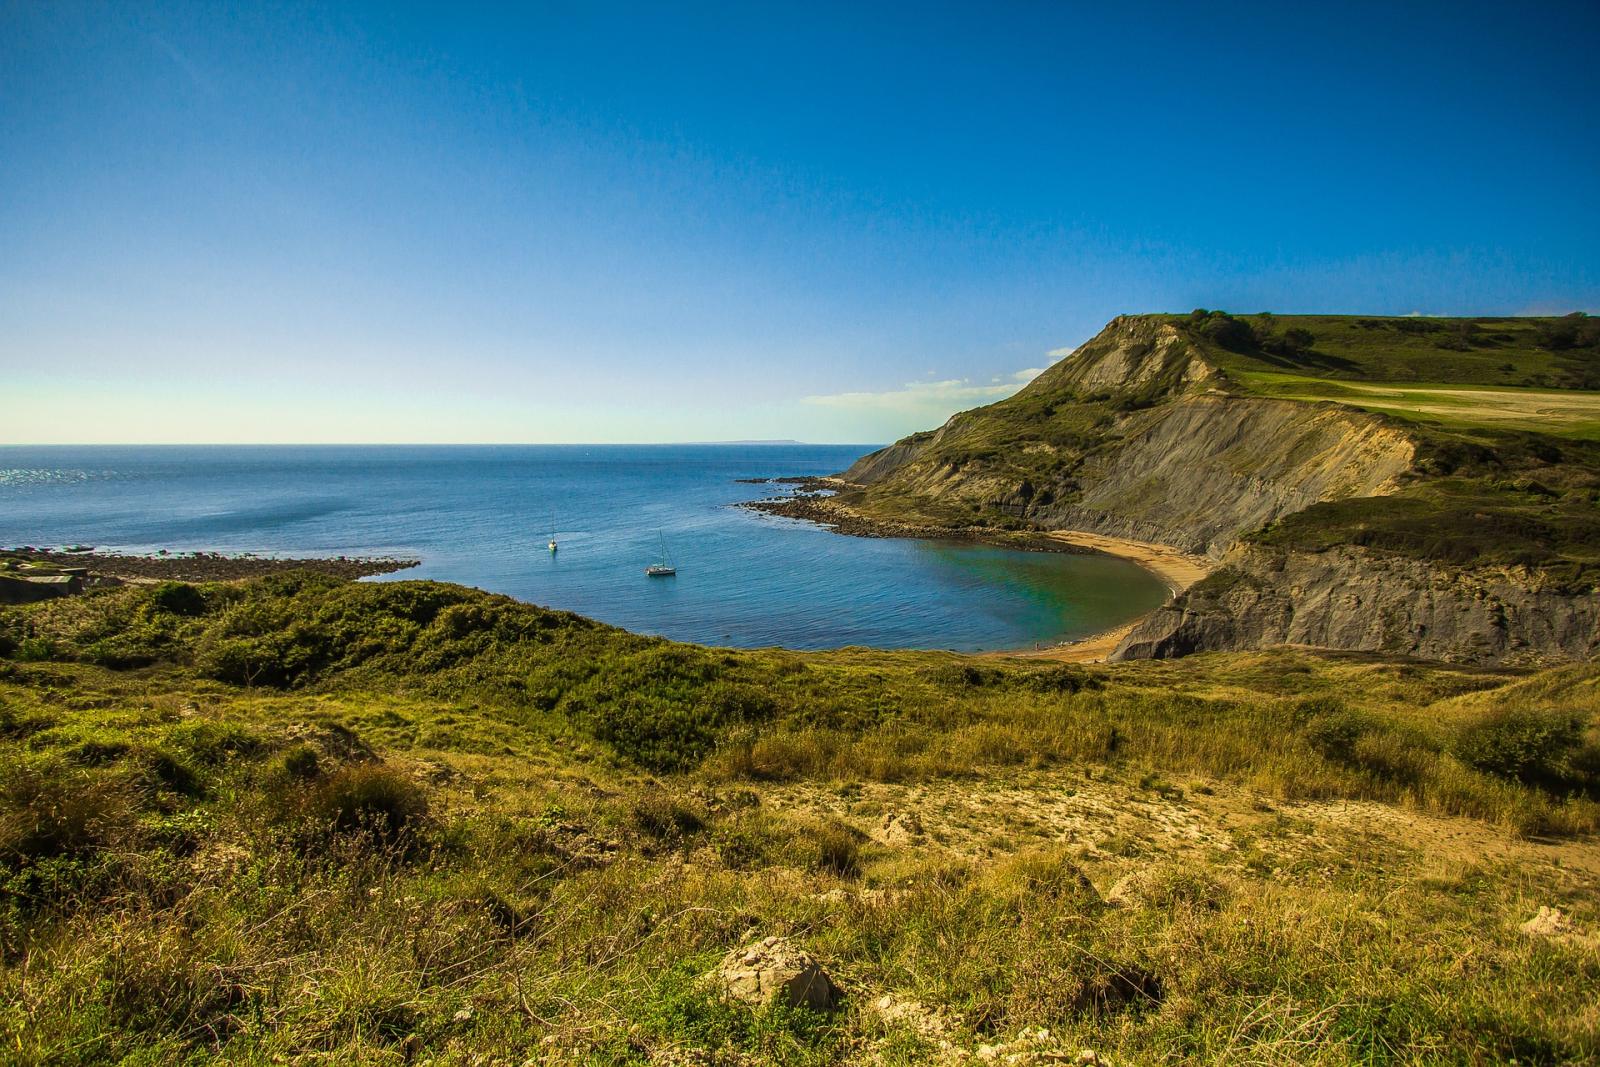 English coastline. Photo credit: Pixabay